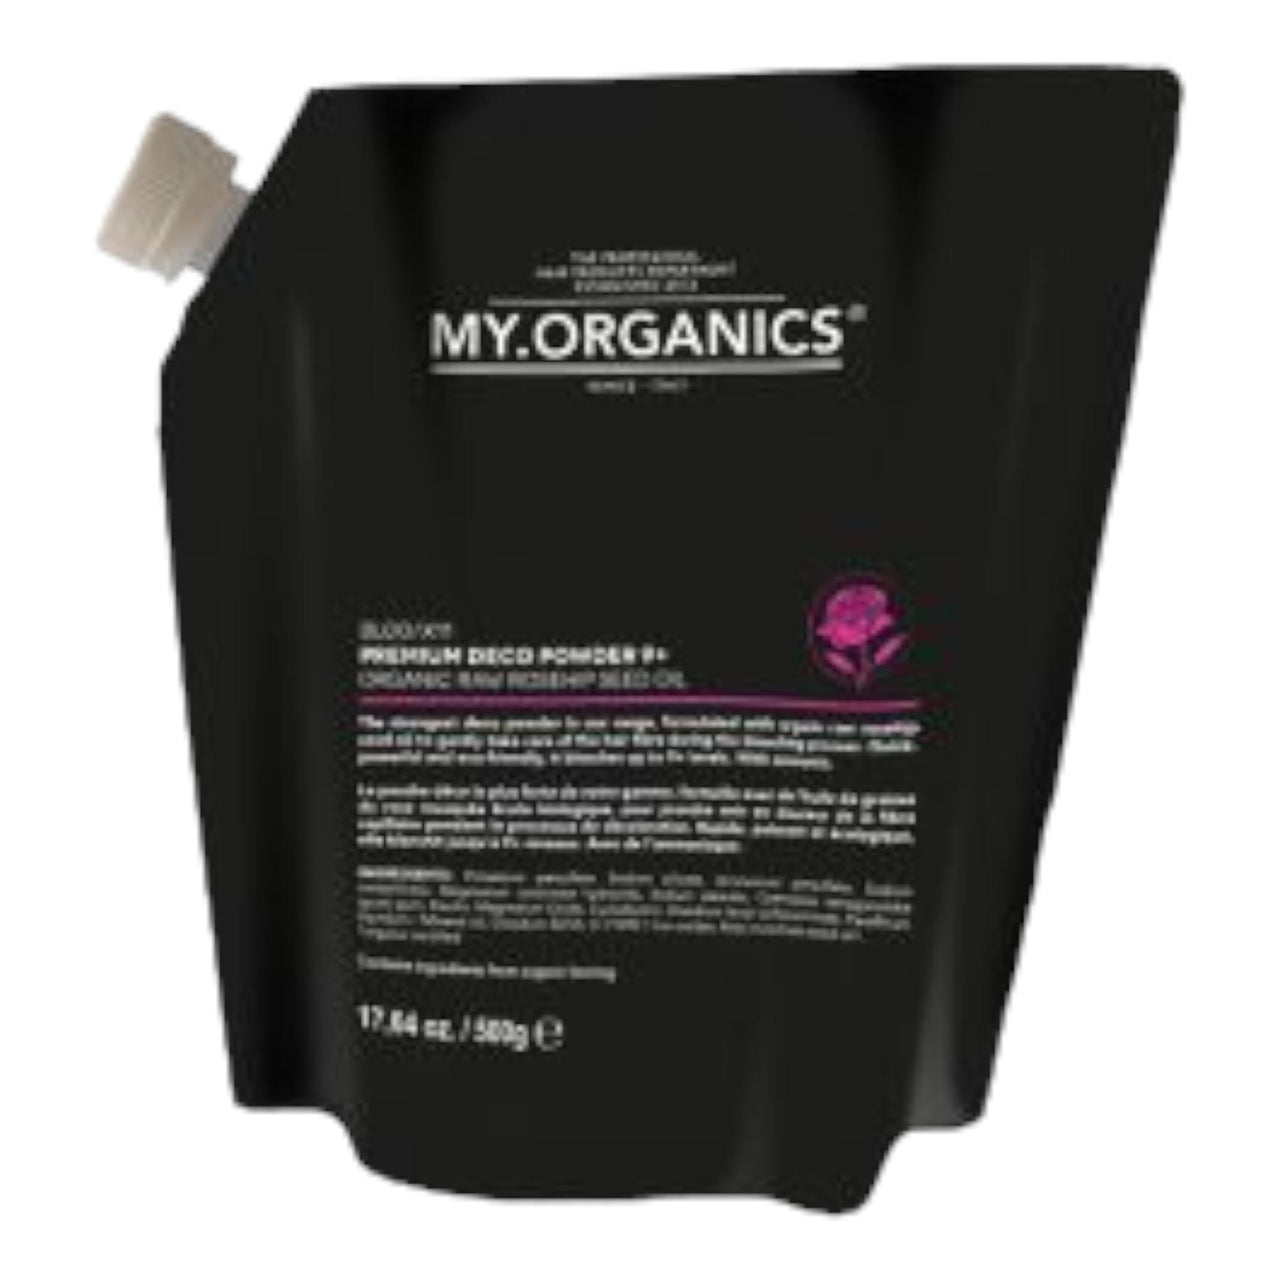 My Organics Premium Bleach Powder 9+ 500gr